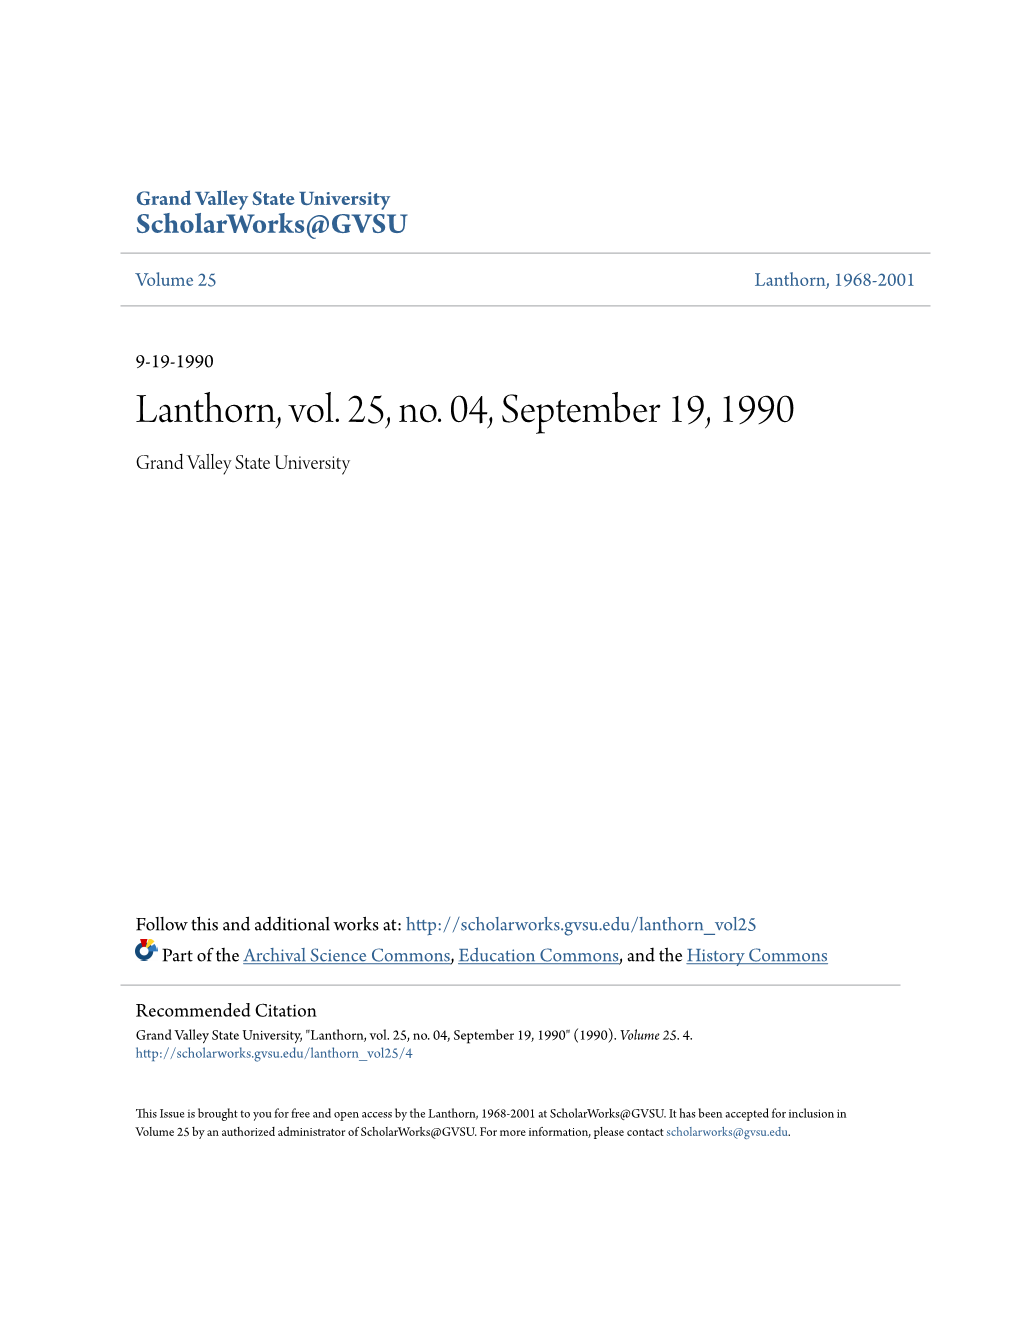 Lanthorn, Vol. 25, No. 04, September 19, 1990 Grand Valley State University